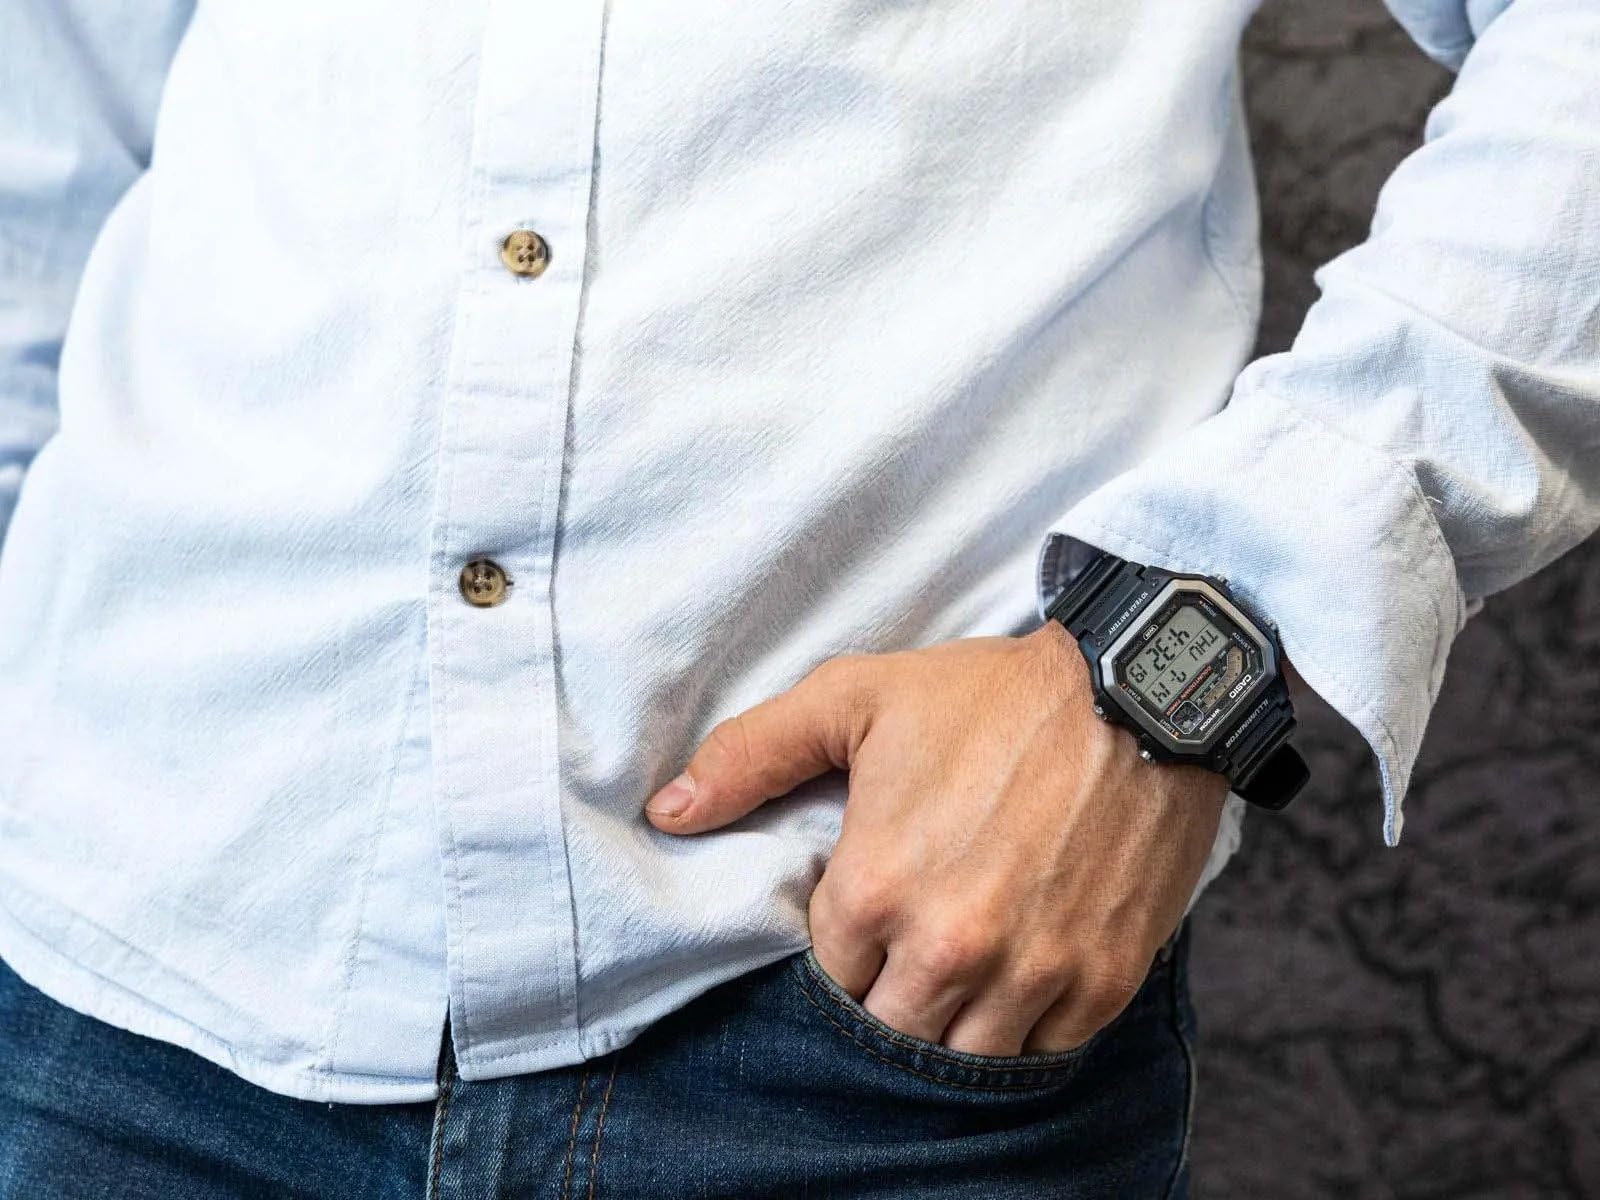 Casio Men's Analogue Digital Quartz Watch with Plastic Strap, Multicolored, Modern